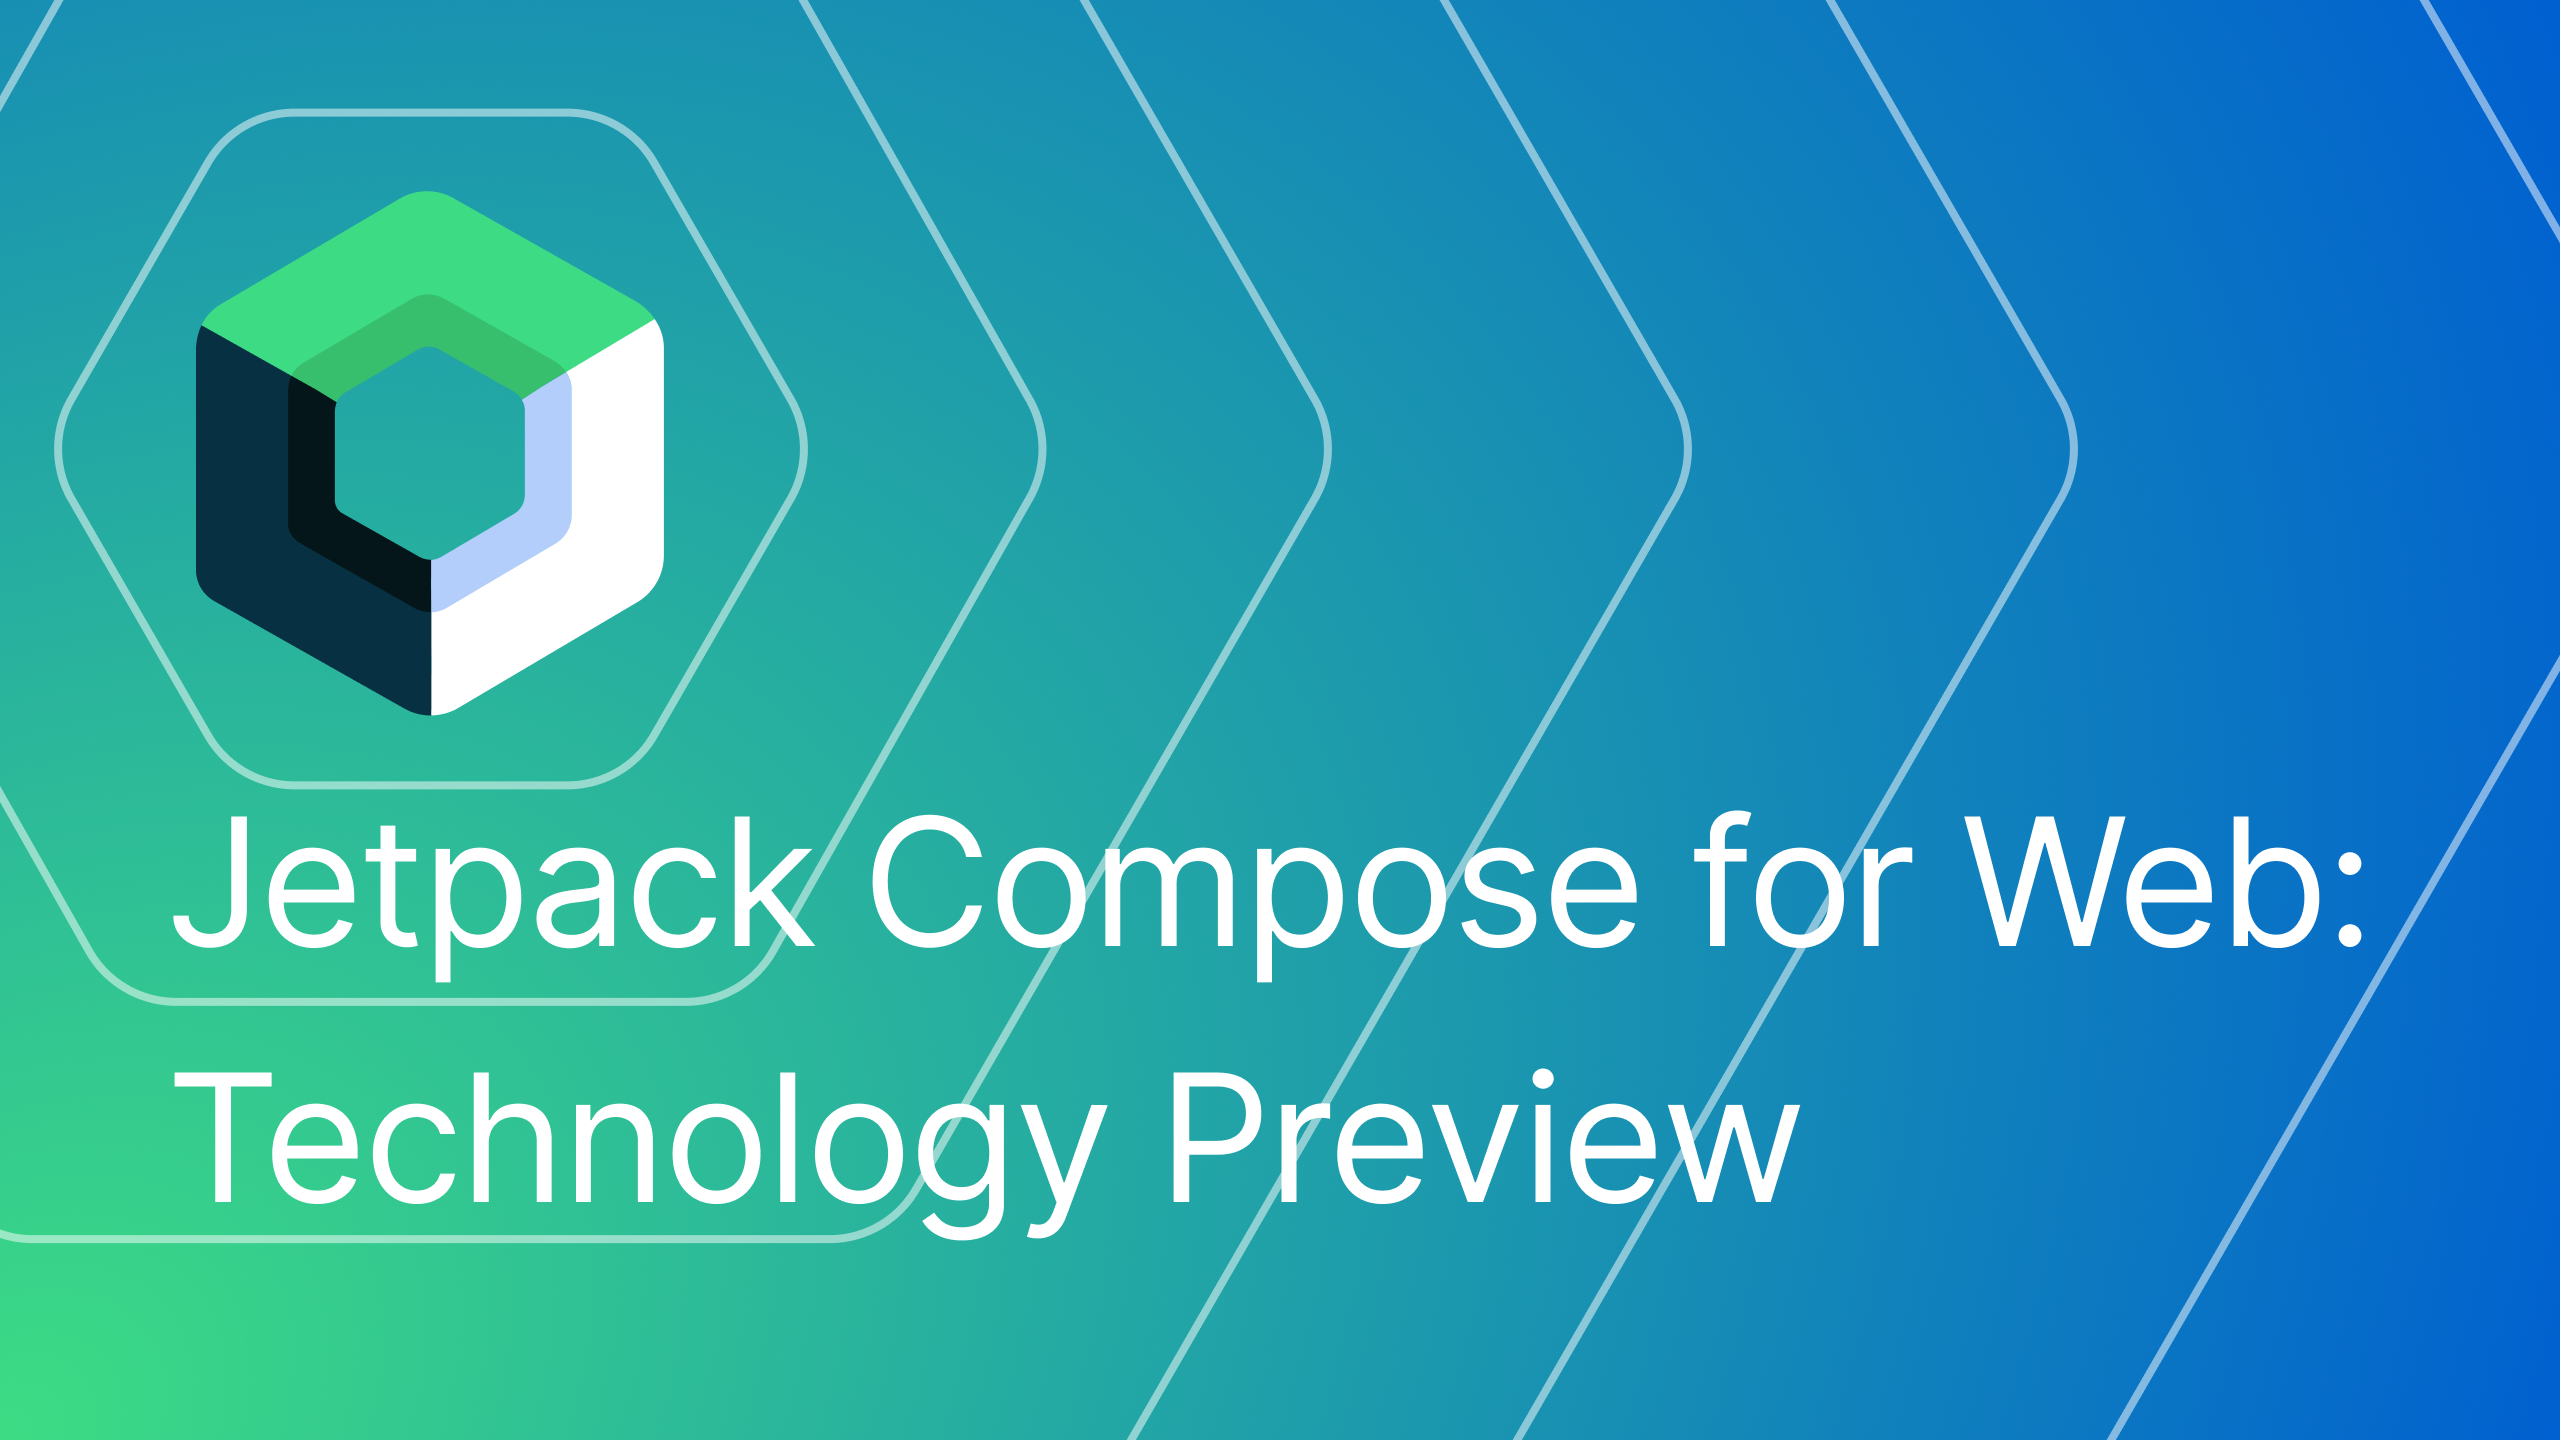 JetBrains 宣布 Jetpack Compose for Web，使用 Kotlin 开发适配多端的 Web UI